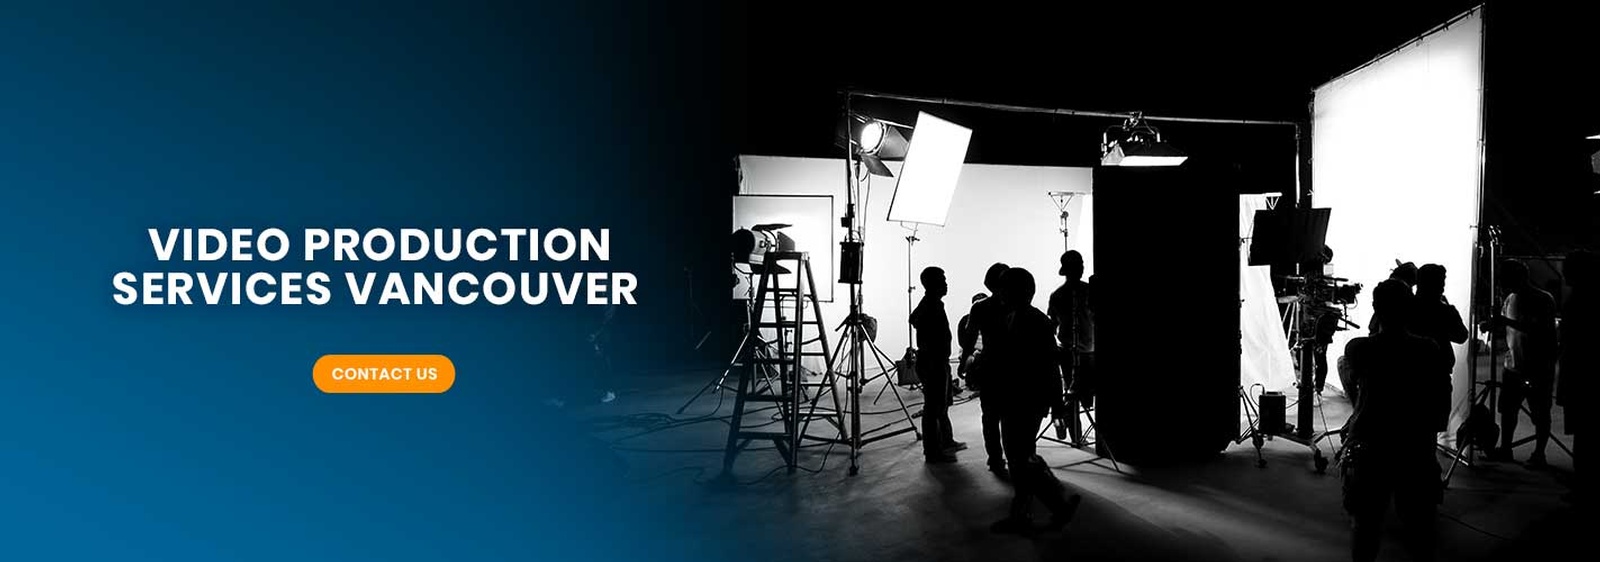 Vancouver Video Production Services